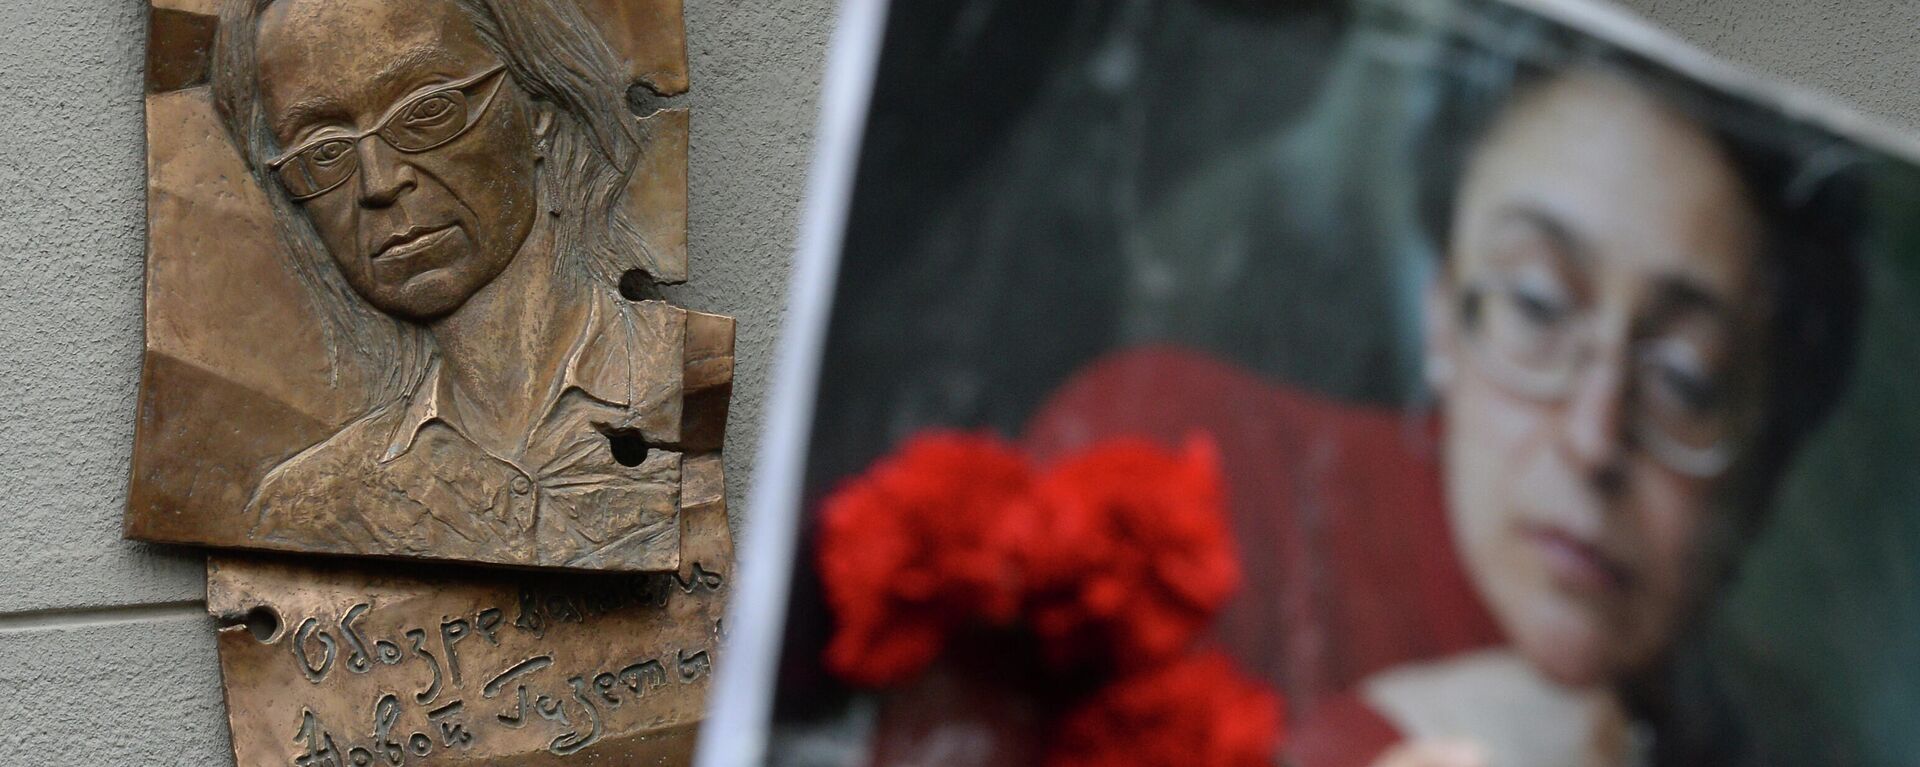 Una placa conmemorativa en honor de la periodista Anna Politkóvskaya  - Sputnik Mundo, 1920, 07.10.2021